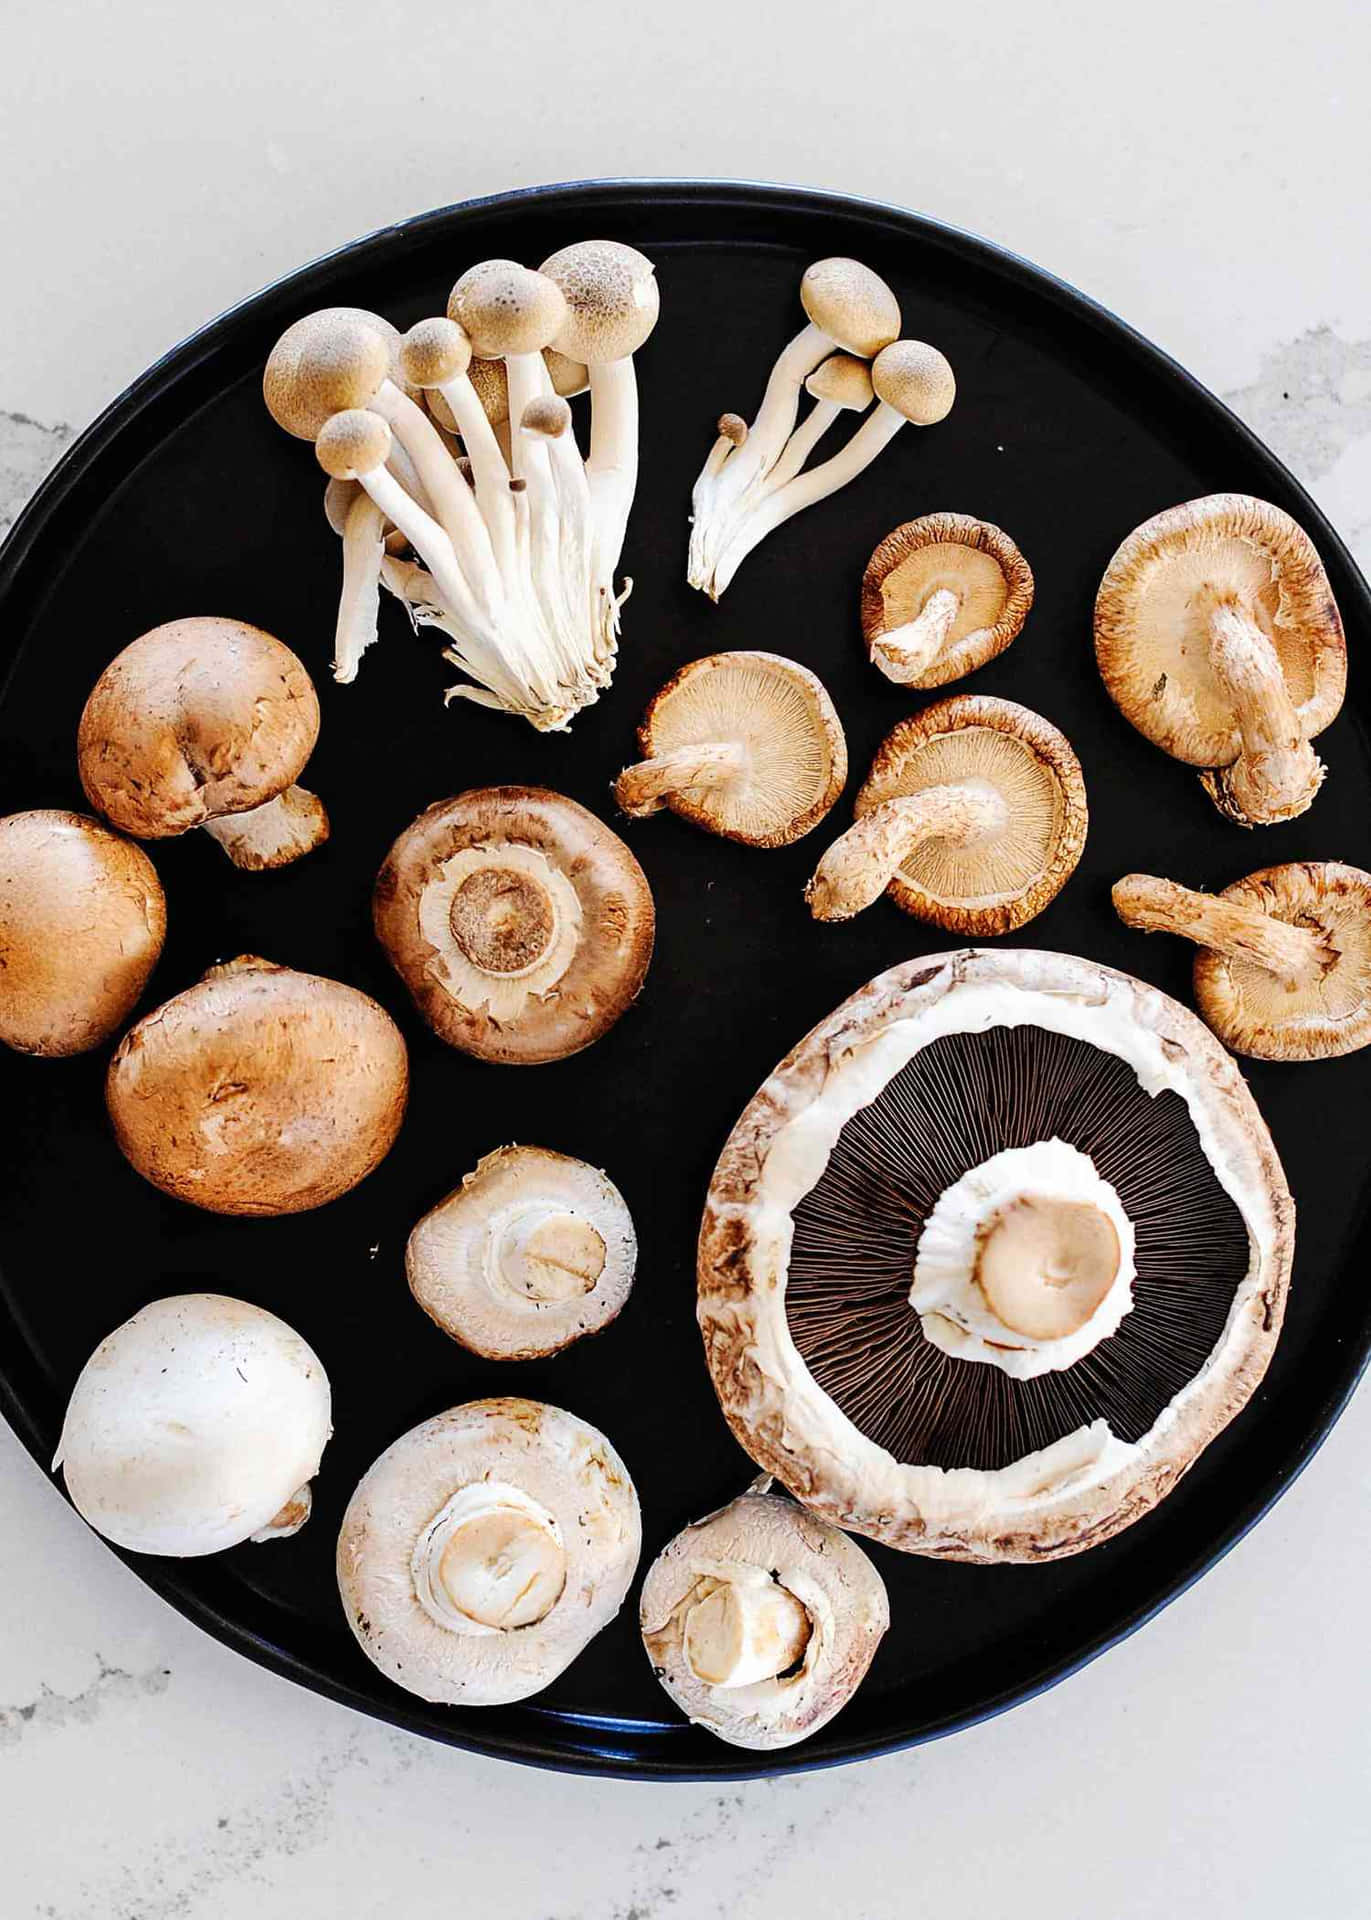 Cute Mushroom Types Pictures